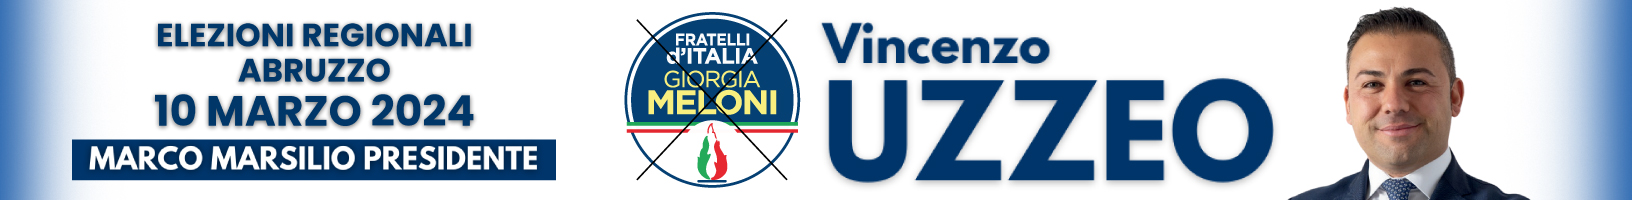 Vincenzo Uzzeo - Elezioni Regionali Abruzzo 2024